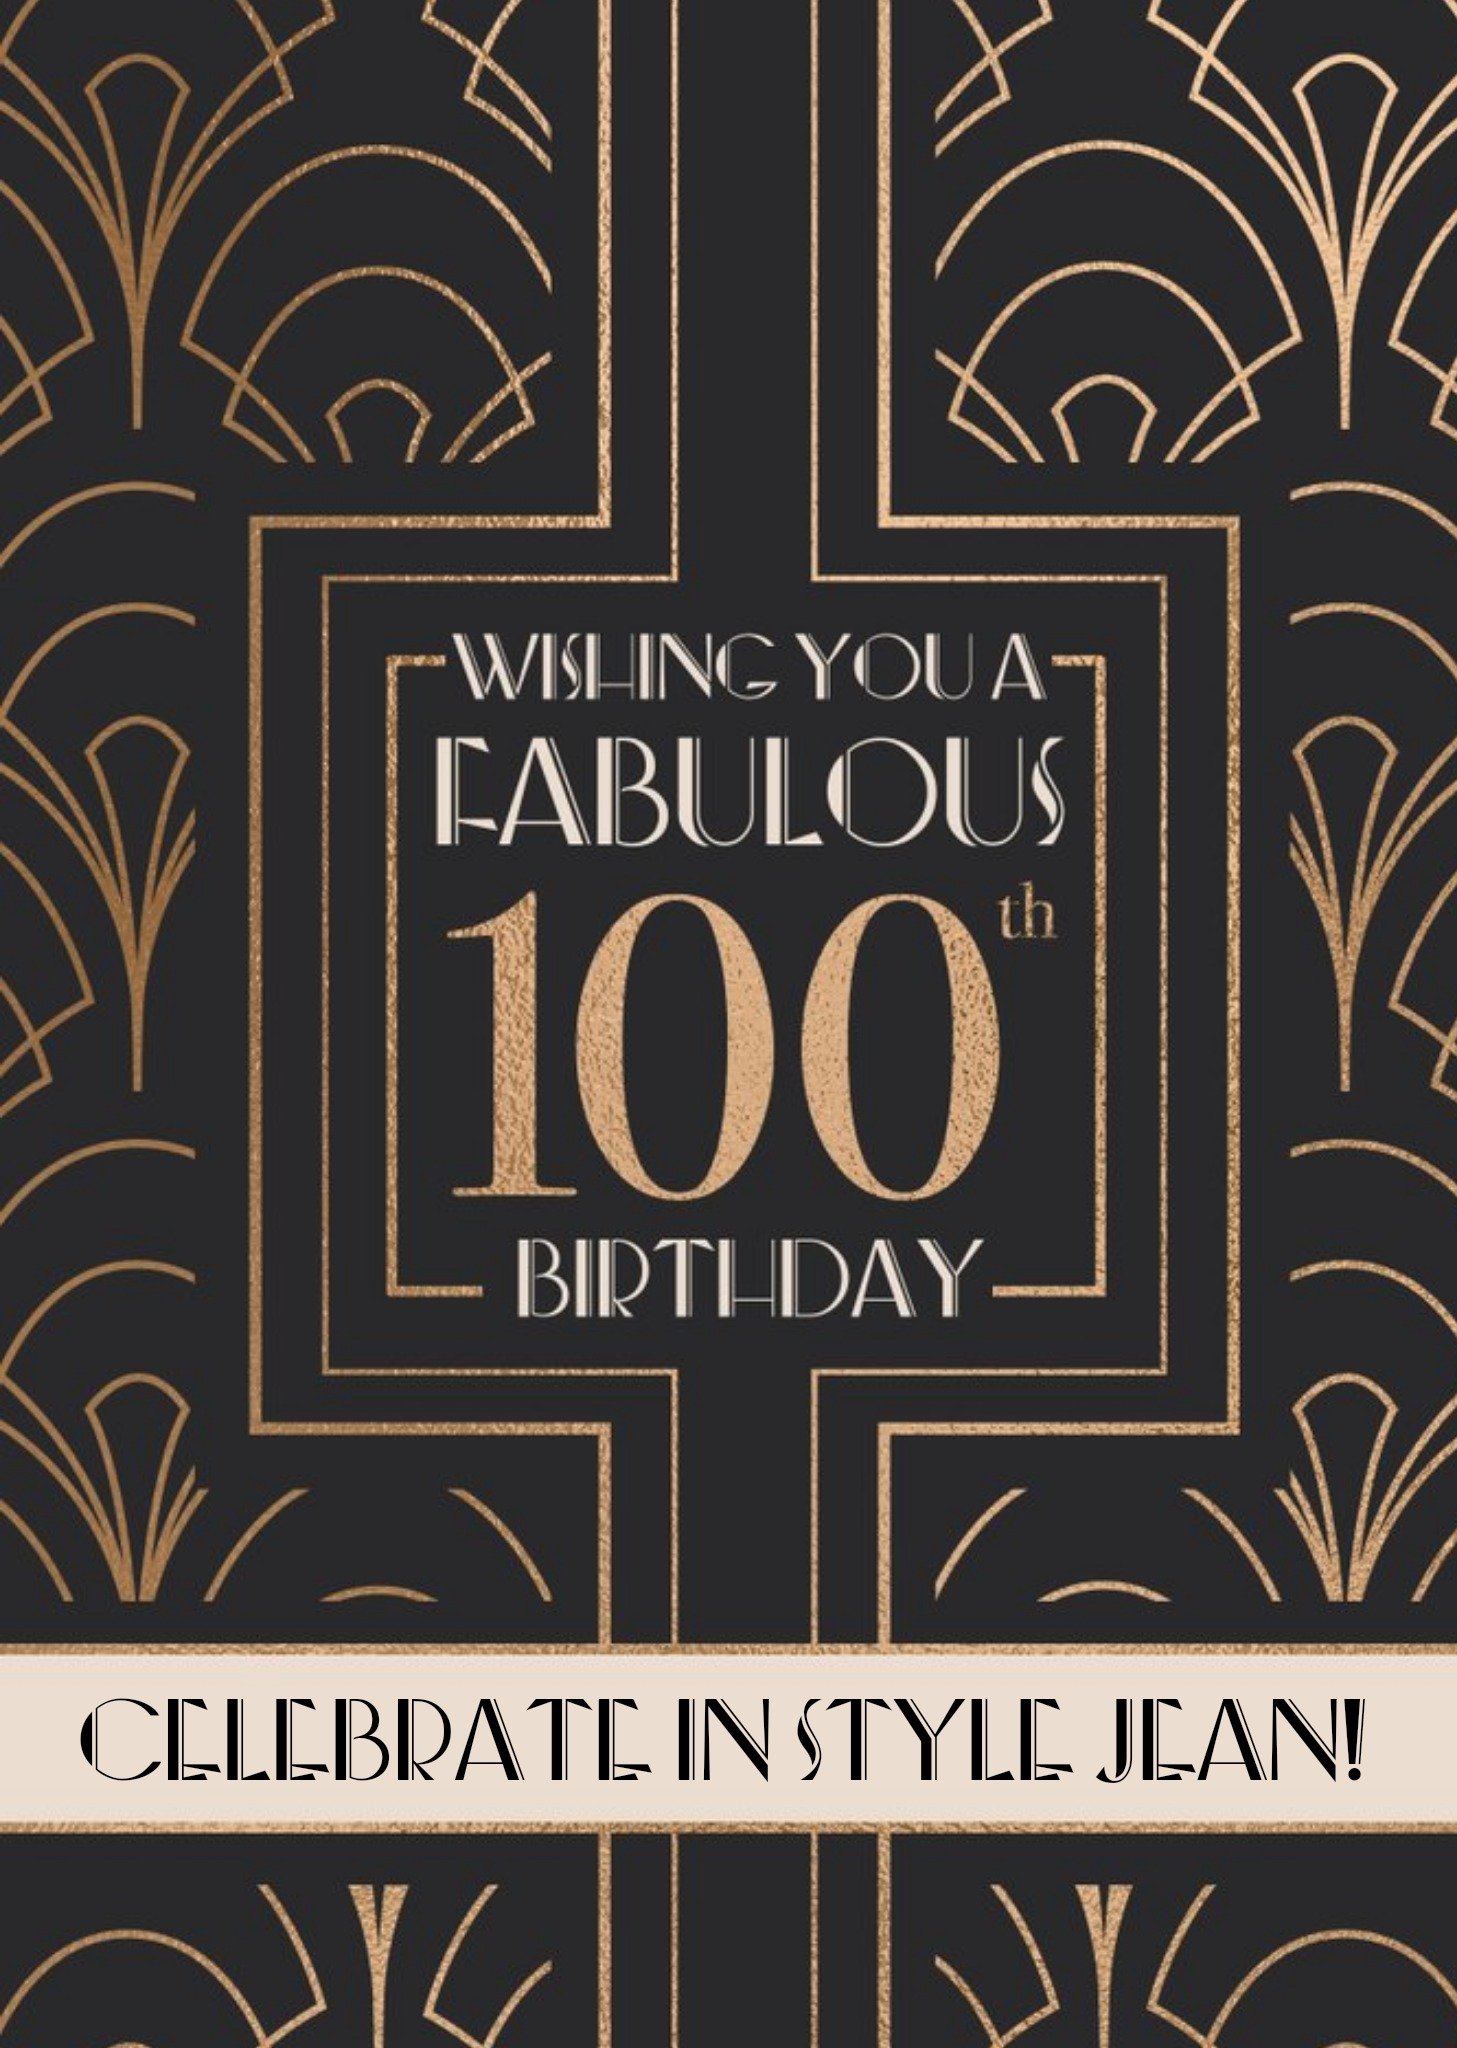 Moonpig Art Deco Wishing You A Fabulous 100th Birthday Card Ecard